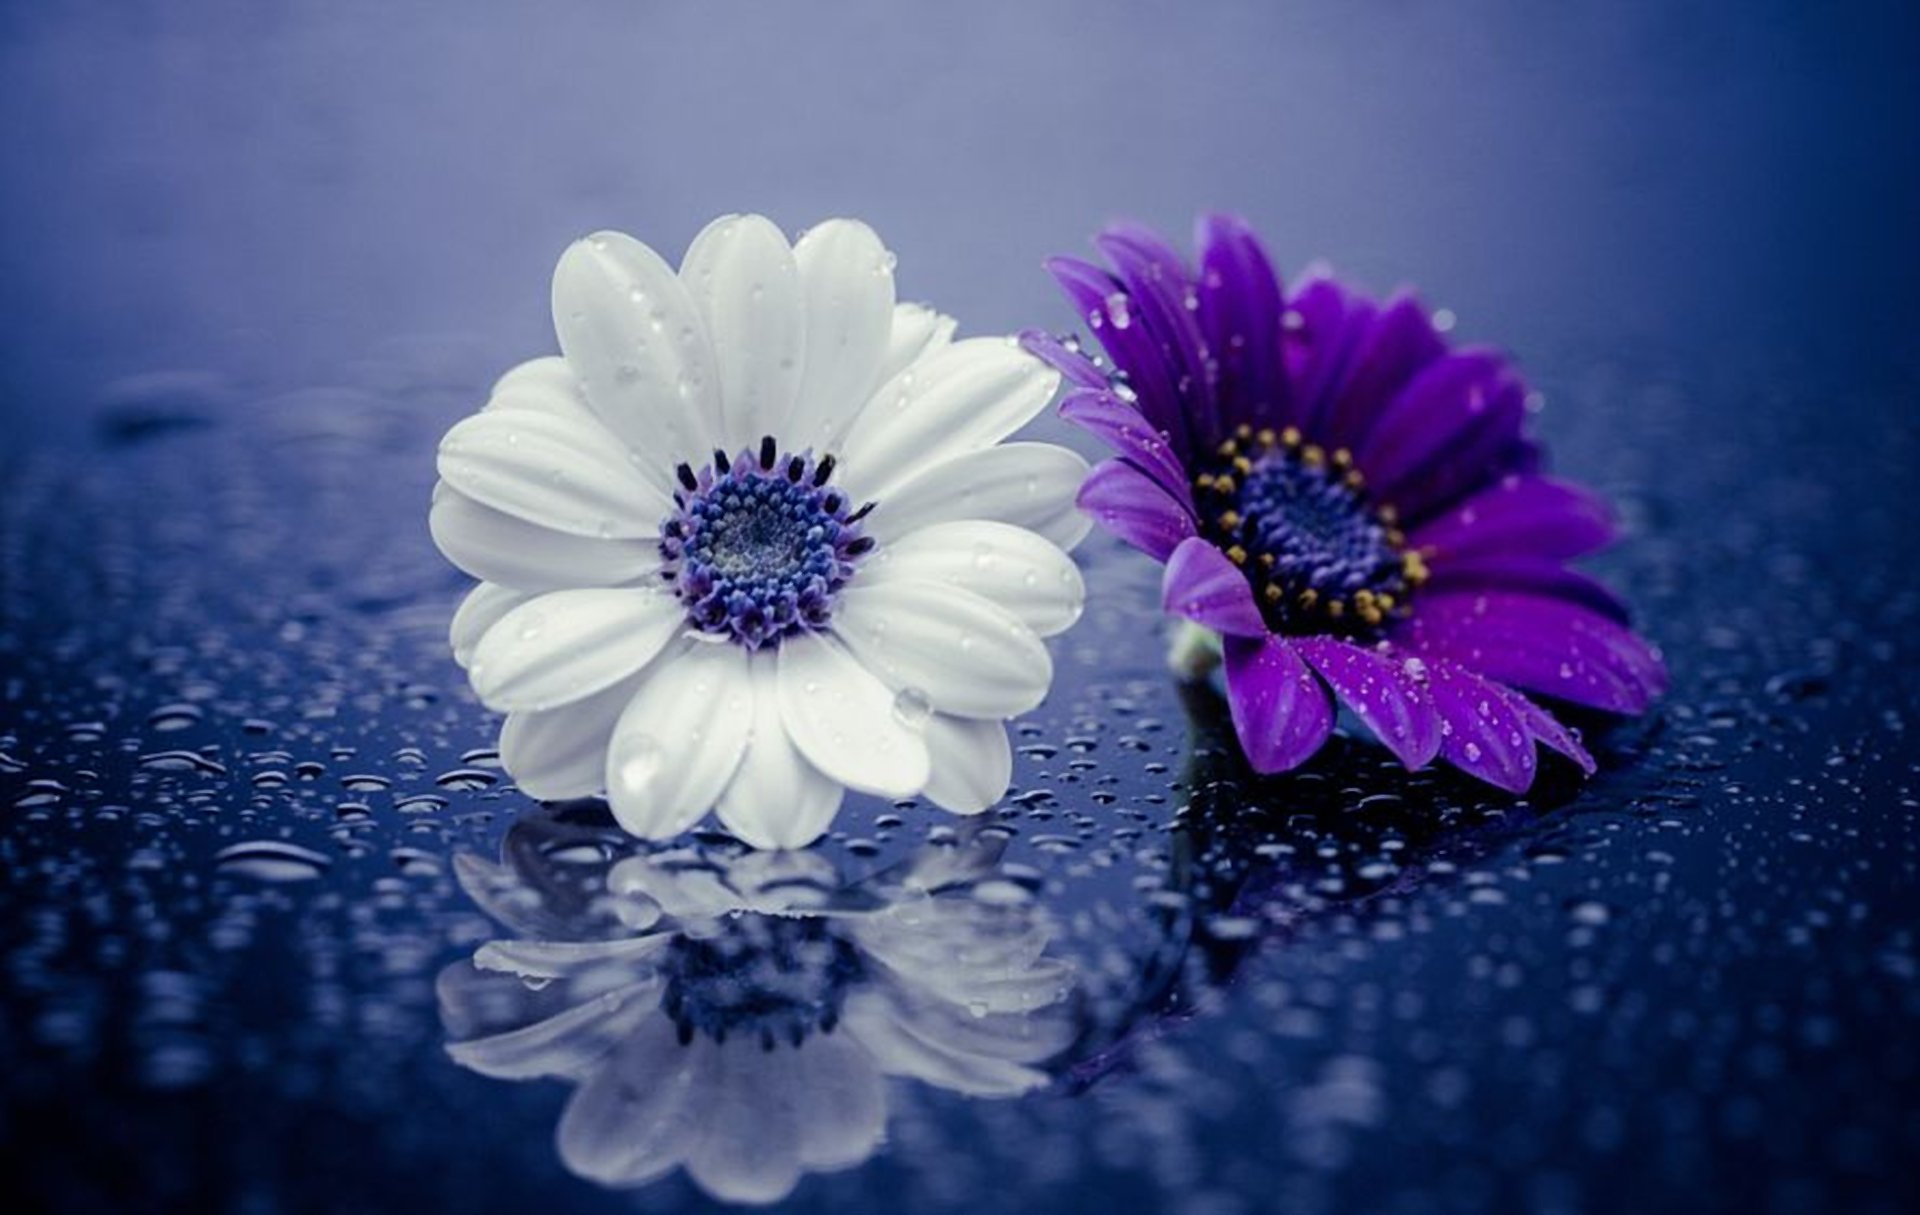 papatya tapete,blau,blütenblatt,violett,blume,lila